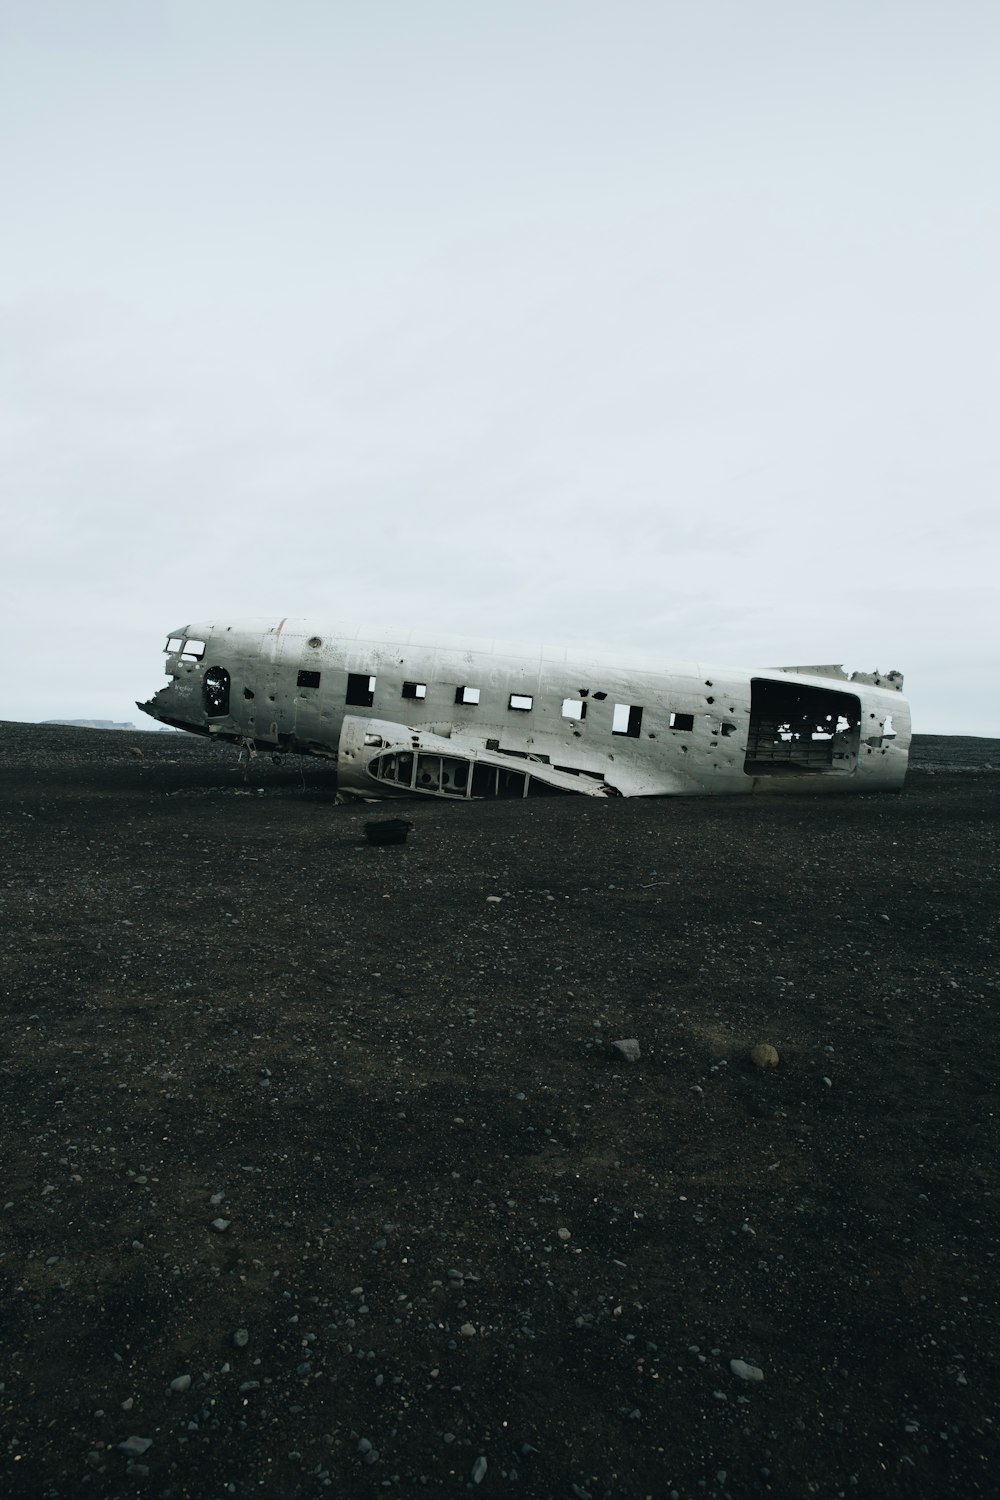 wrecked white plane on plain area at daytime